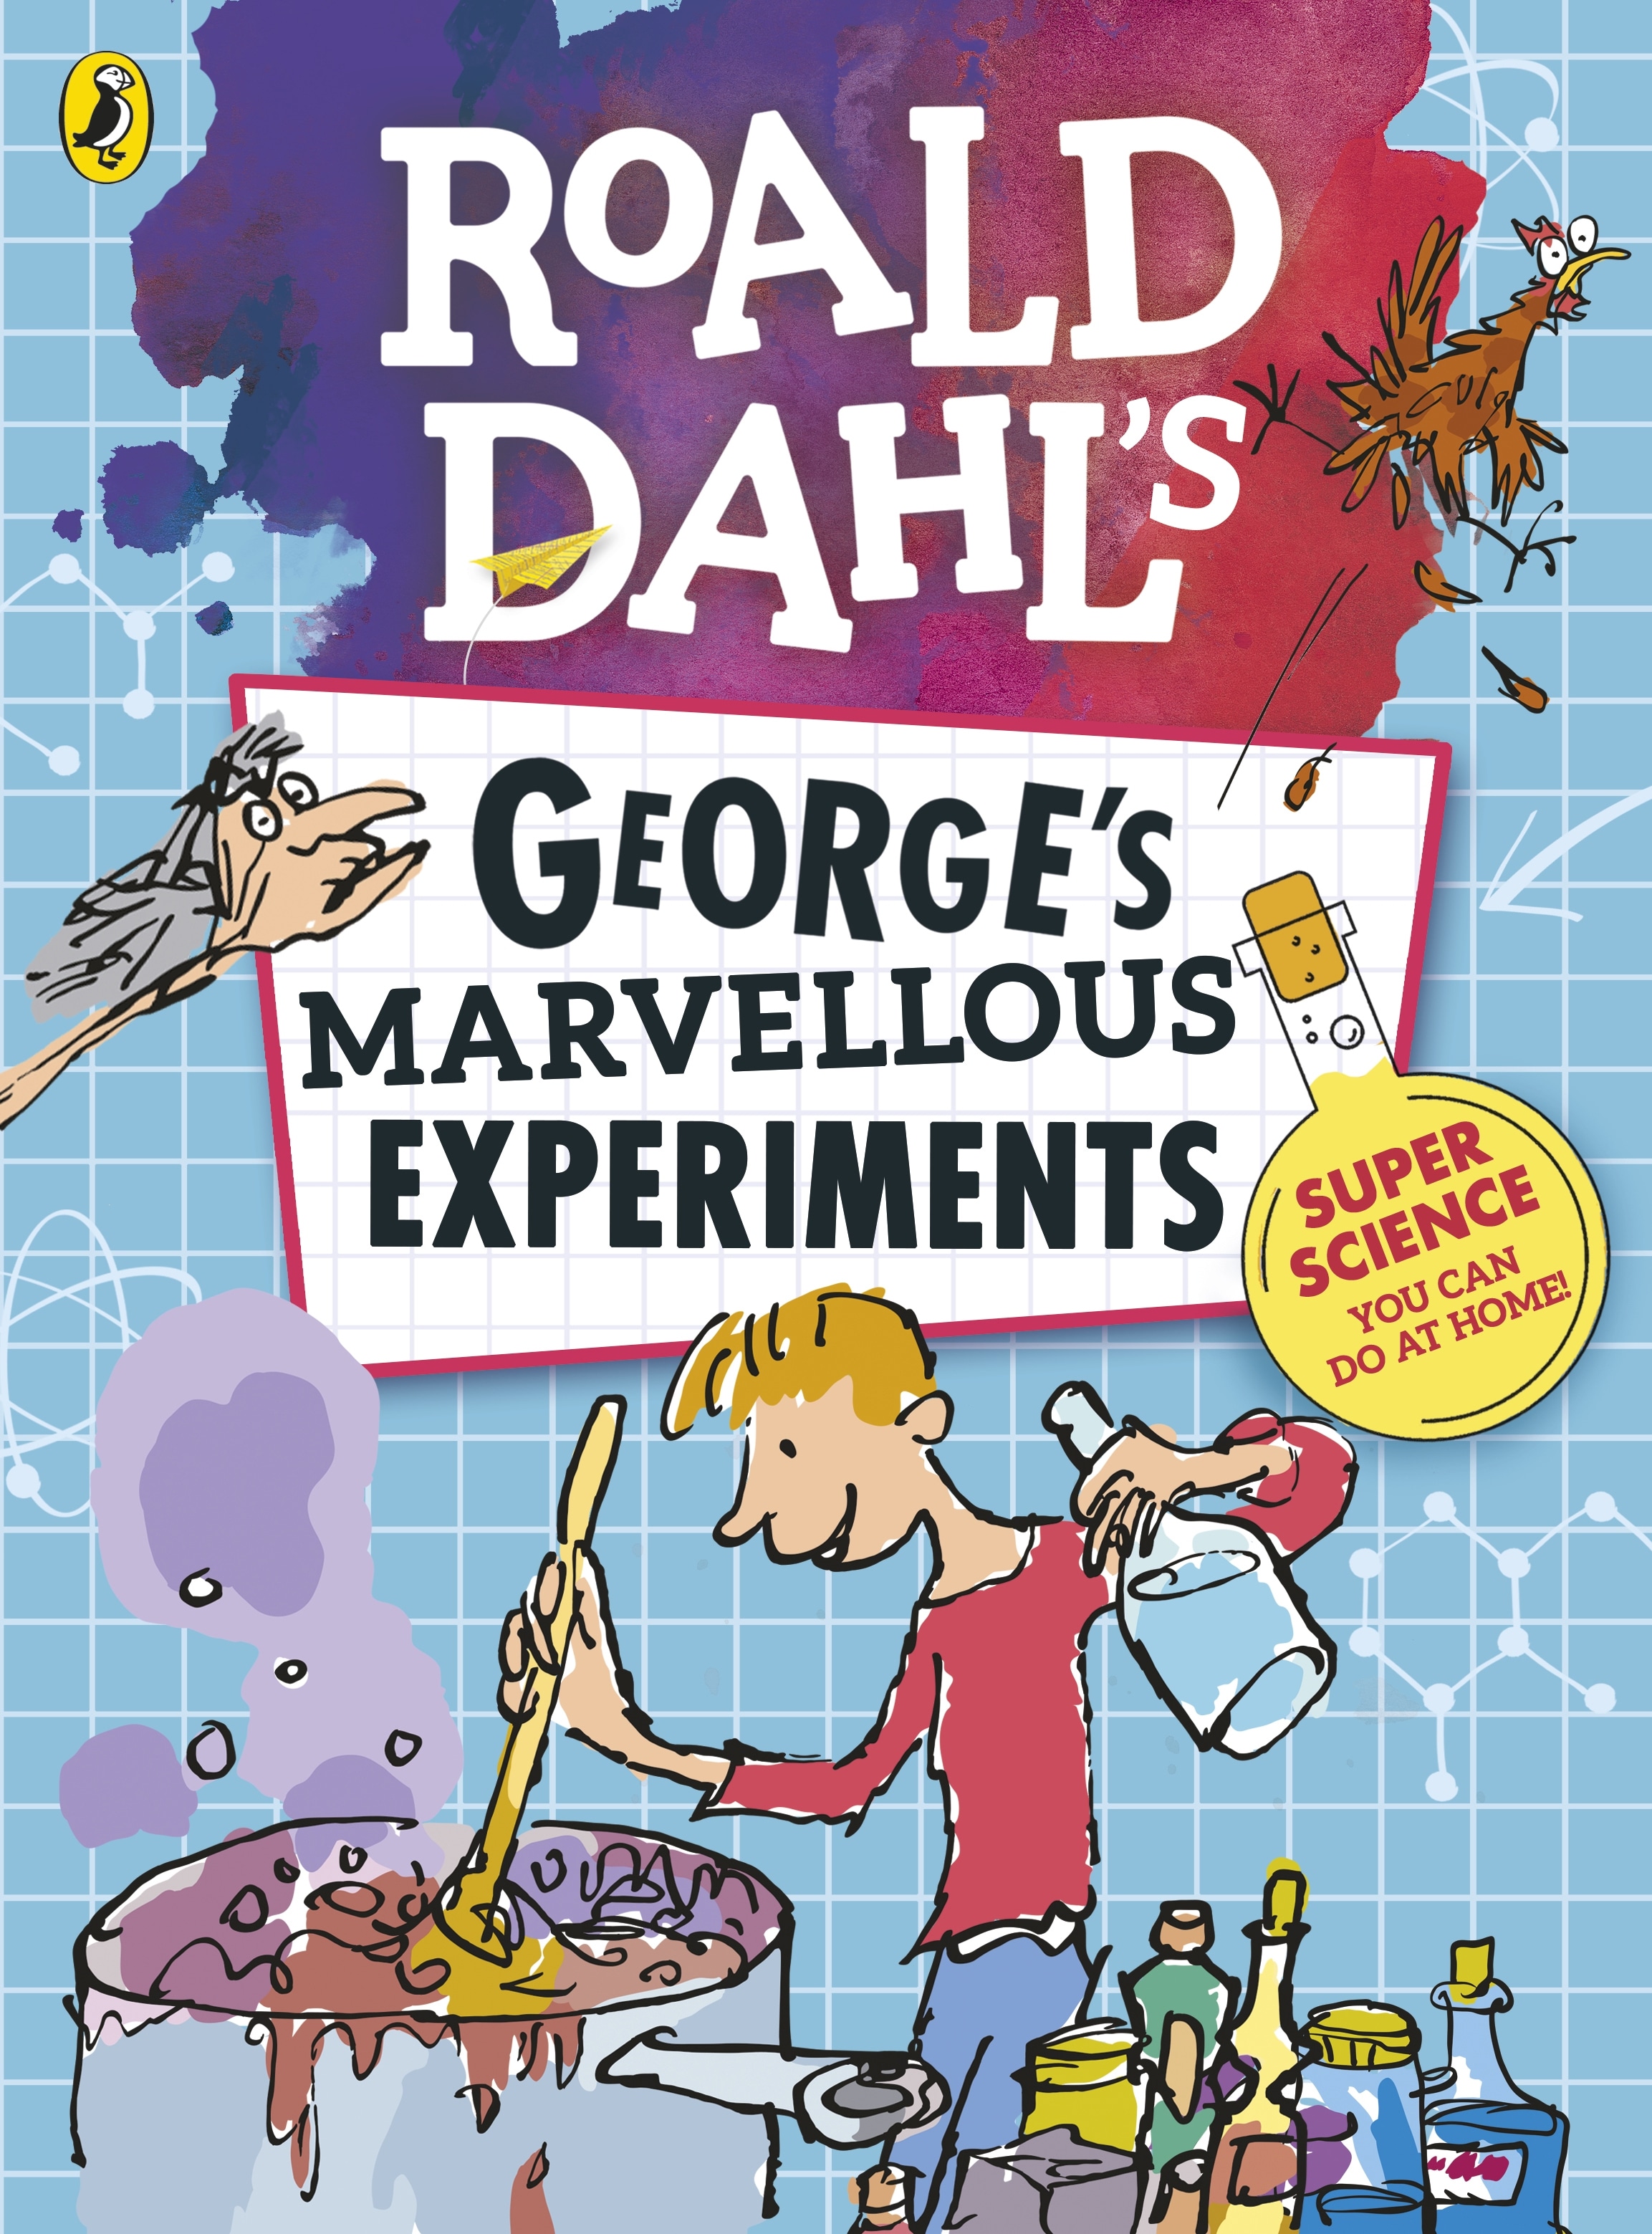 Book “Roald Dahl: George's Marvellous Experiments” — February 23, 2017